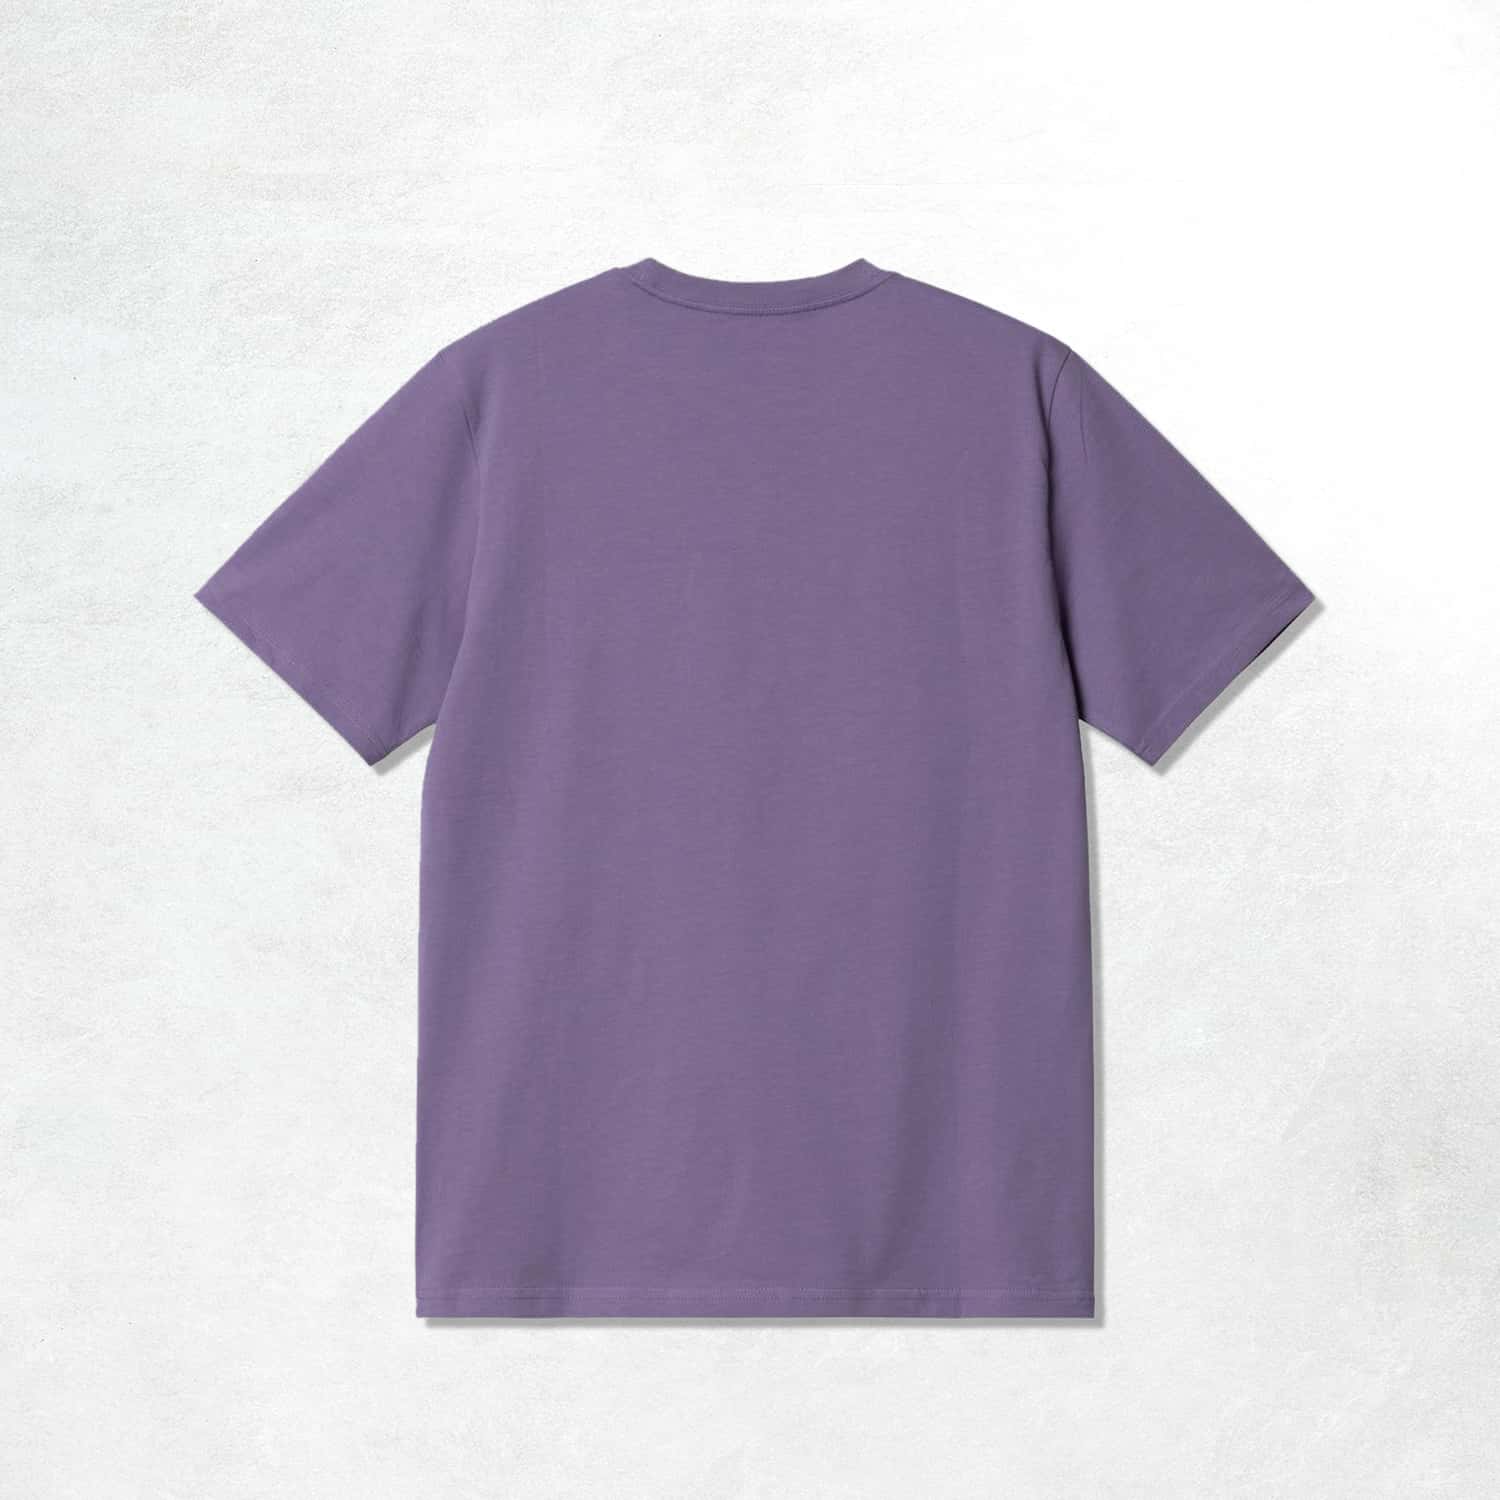 Carhartt WIP S/S Pocket T-Shirt: Violanda (Back)